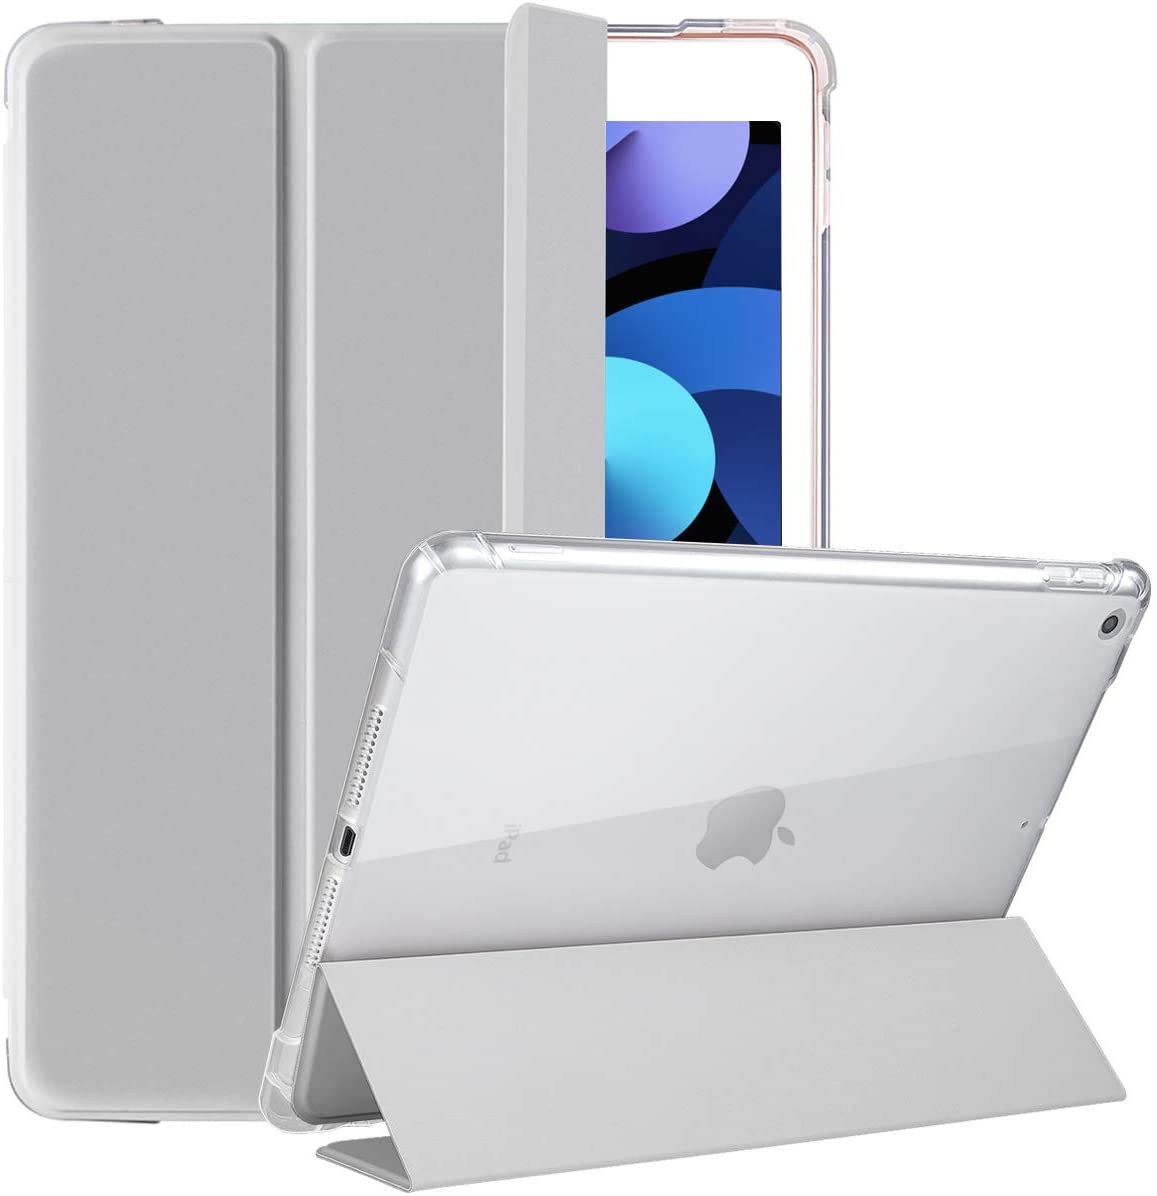 Smart case เคสไอแพดมีที่ใส่ปากกา รุ่น มินิ 1/2/3 , มินิ 4/5 , iPad Air1/2 9.7 , iPad Gen5/6 , iPad Gen7/8 10.2 , iPad Air3 10.5 , iPad Air4 10.9 , iPad Pro 11 เคสใสมีที่ใส่ปากกา เคสไอแพด